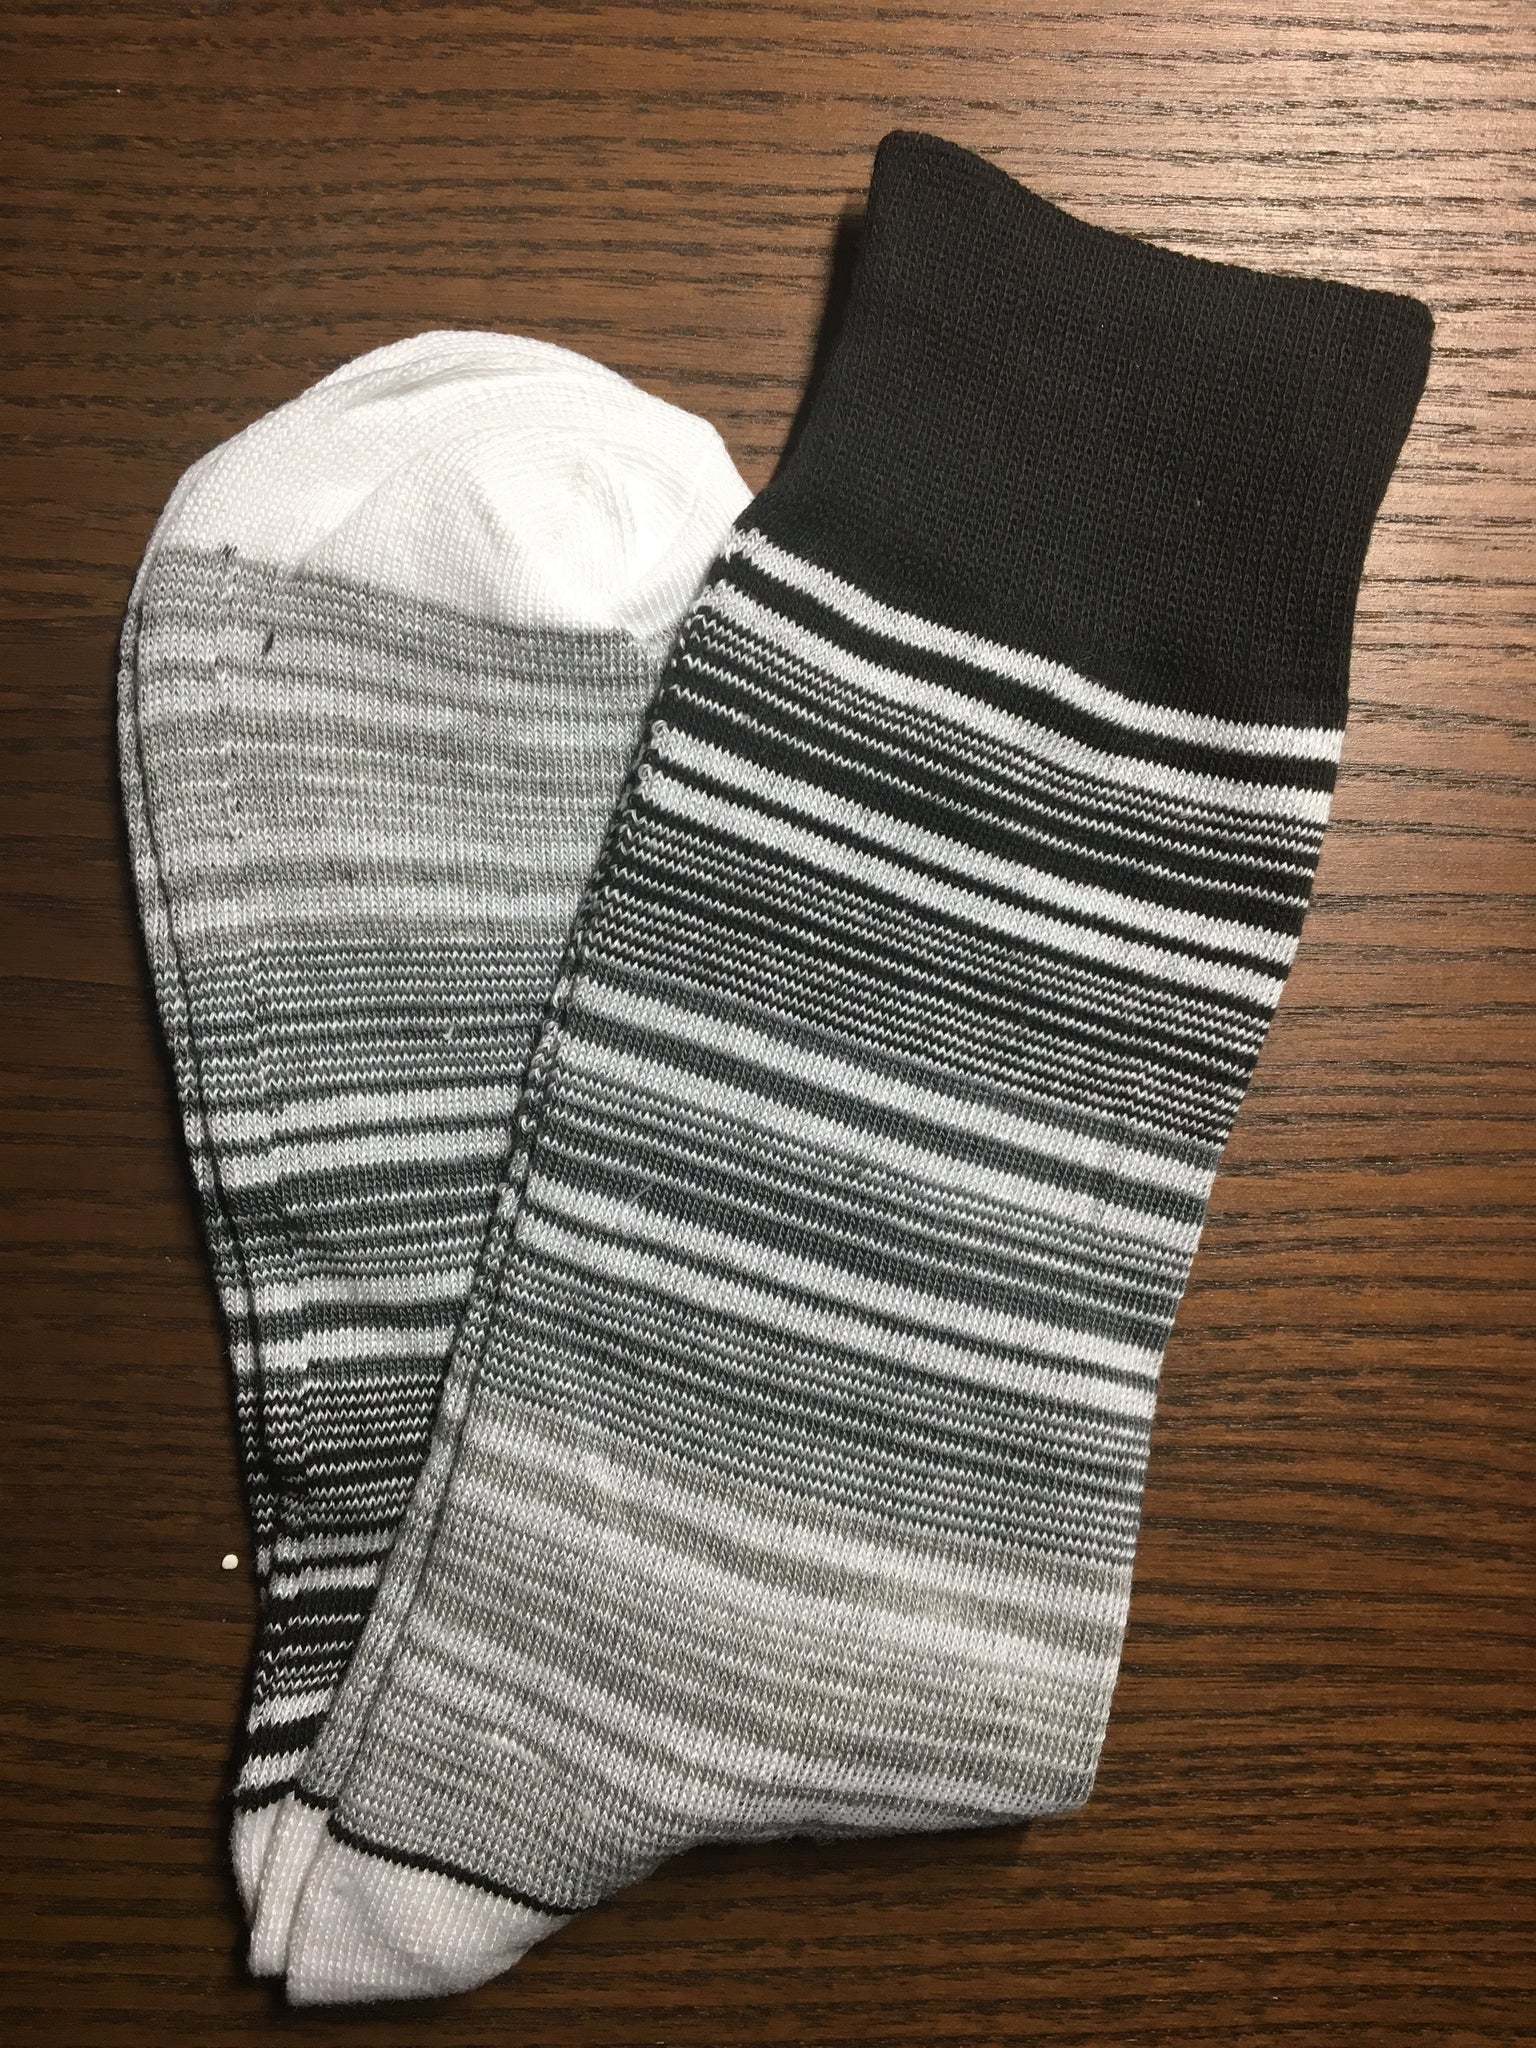 Medias blancas y negras - Socksn'Ties